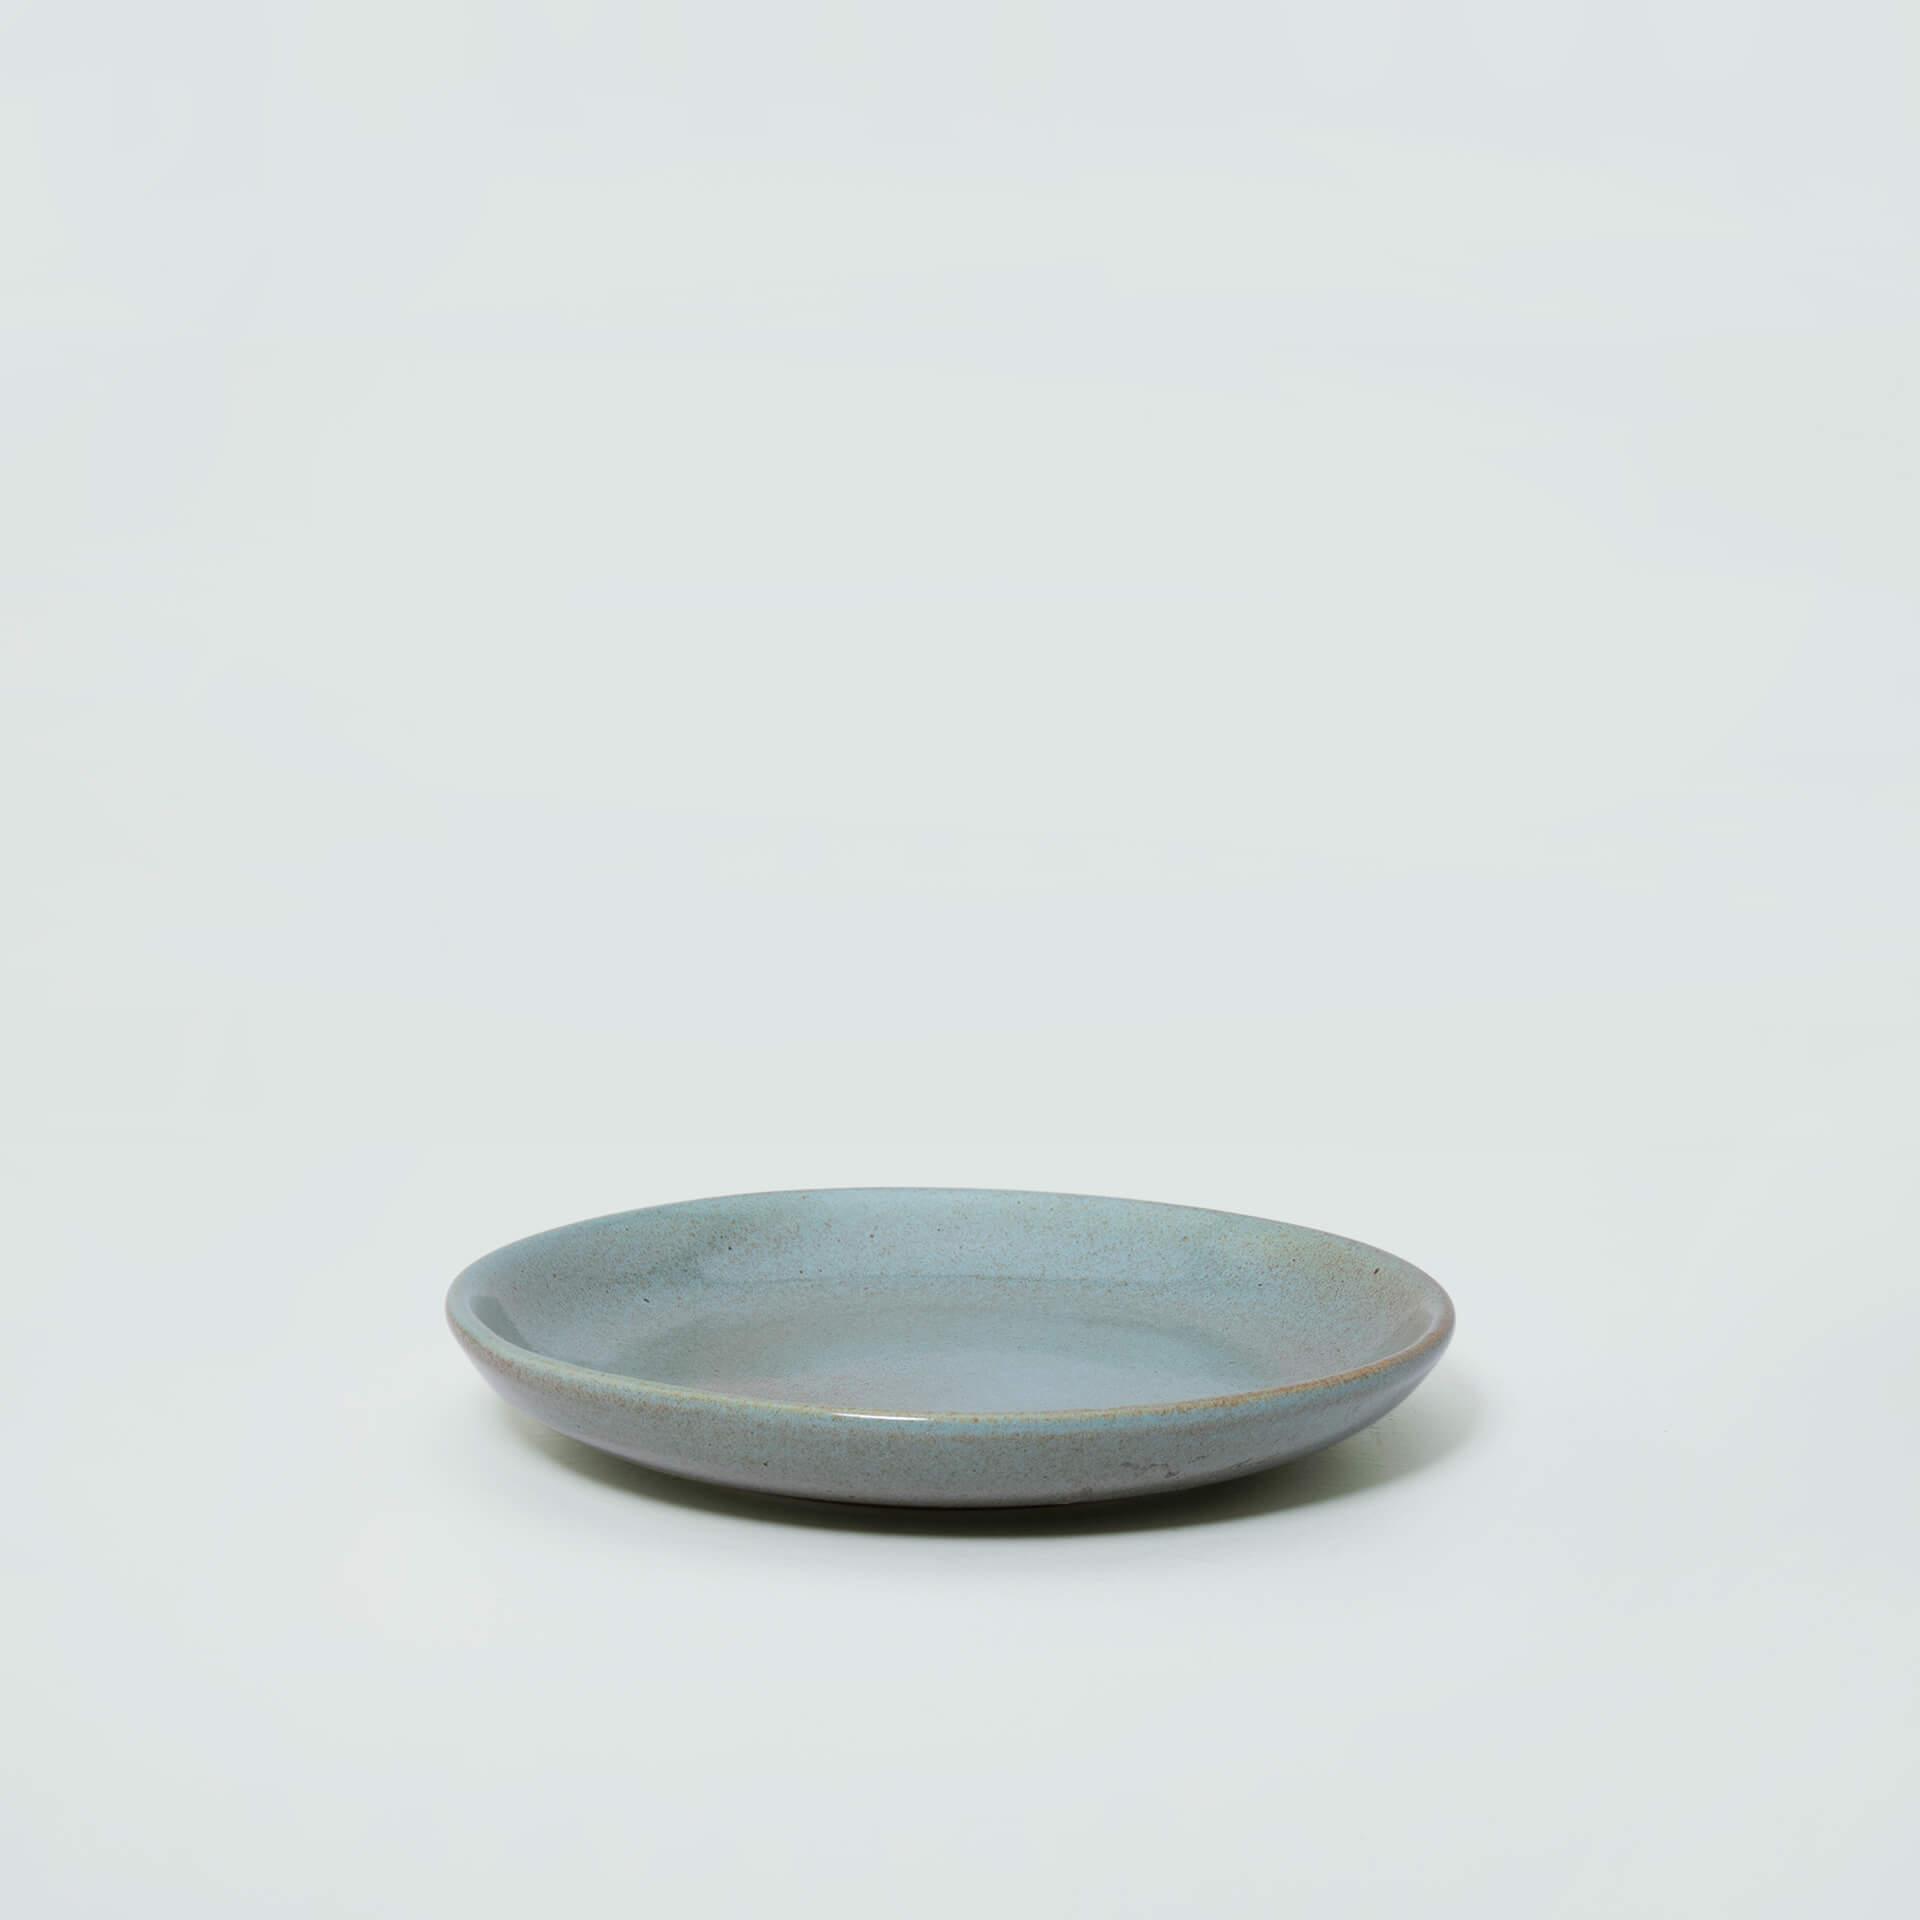 aqua rustic ceramic side plate